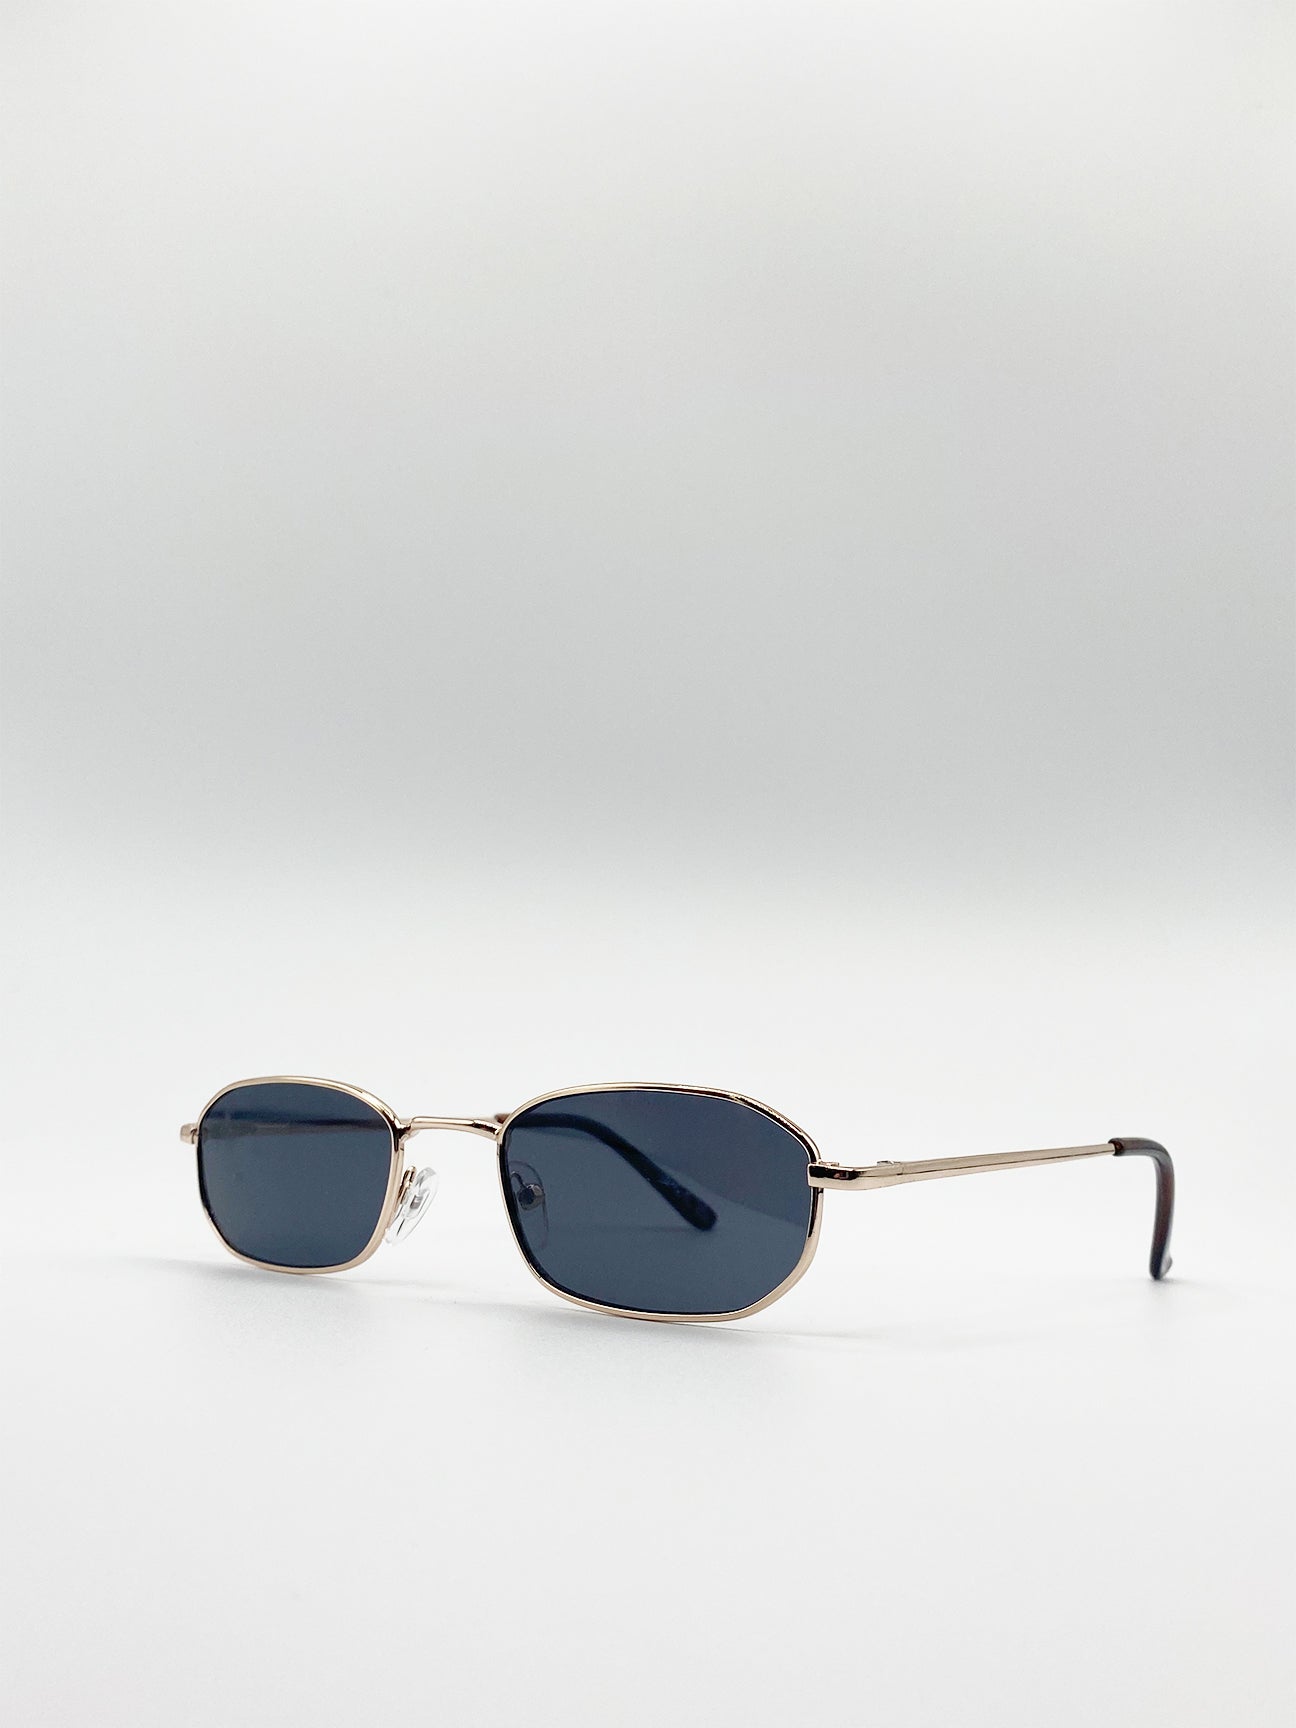 Oval Sunglasses In Black Smoke